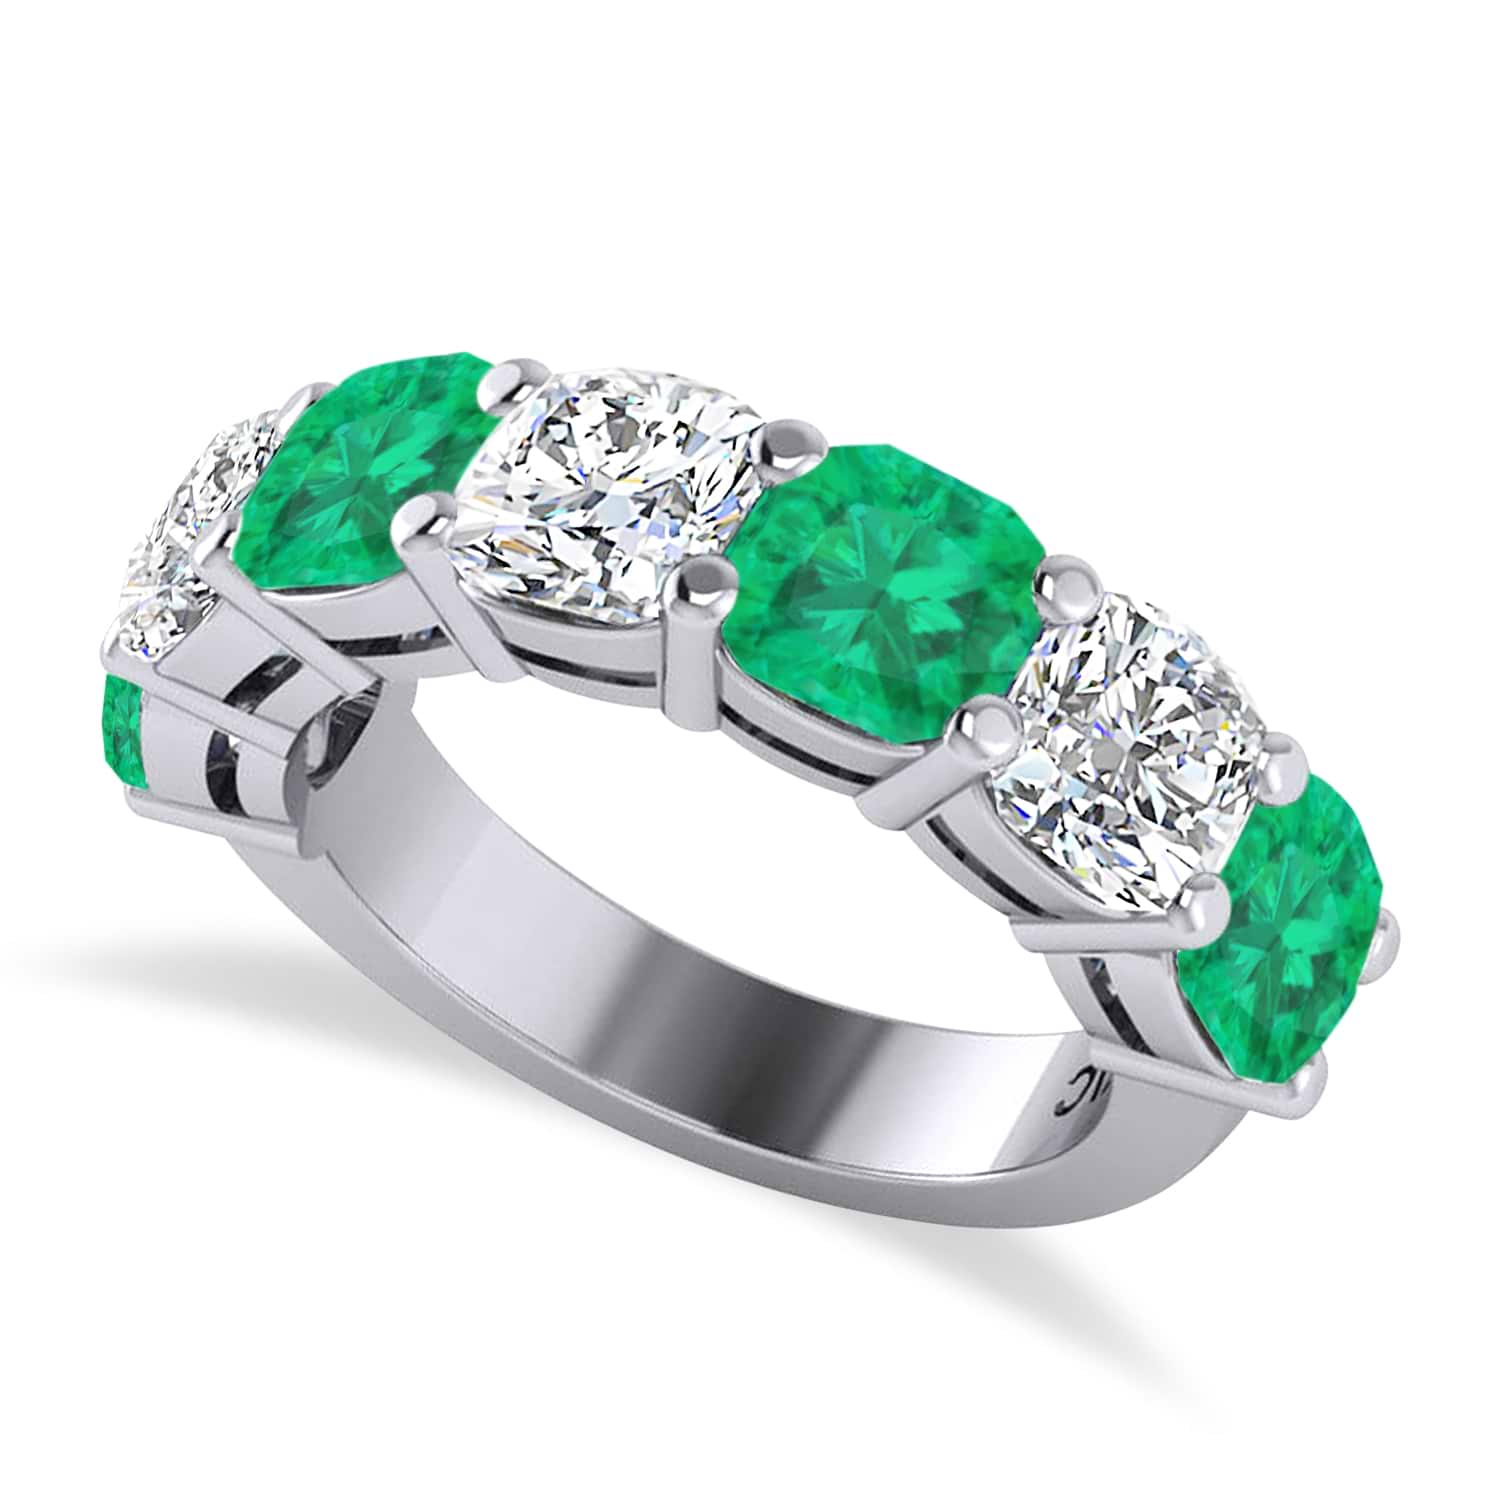 Cushion Diamond & Emerald Seven Stone Ring 14k White Gold (5.85ct)